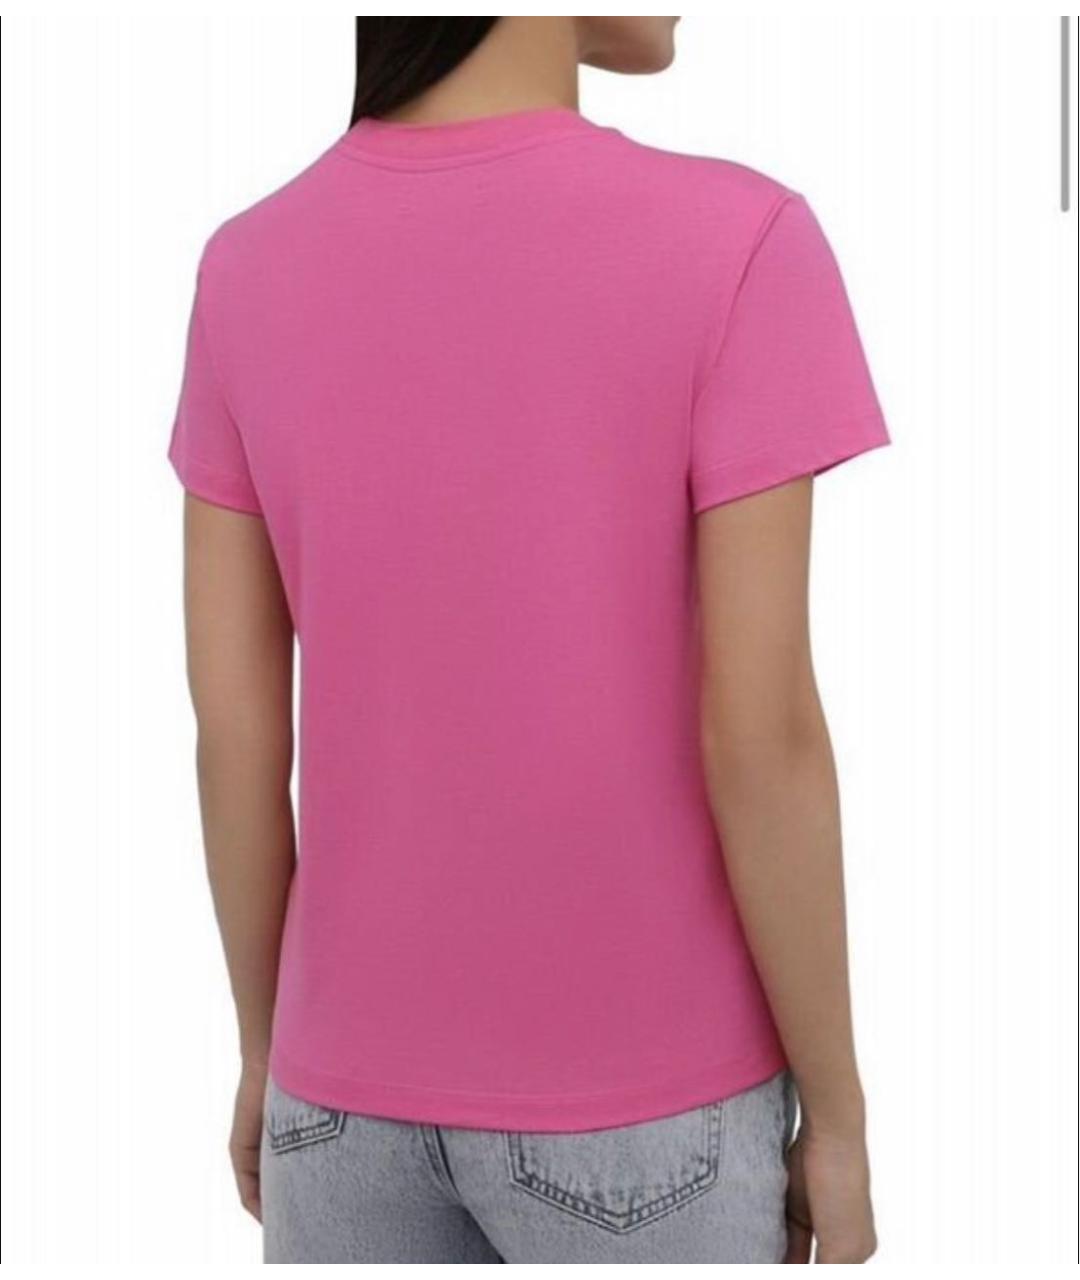 THE PANGAIA Розовая хлопковая футболка, фото 4